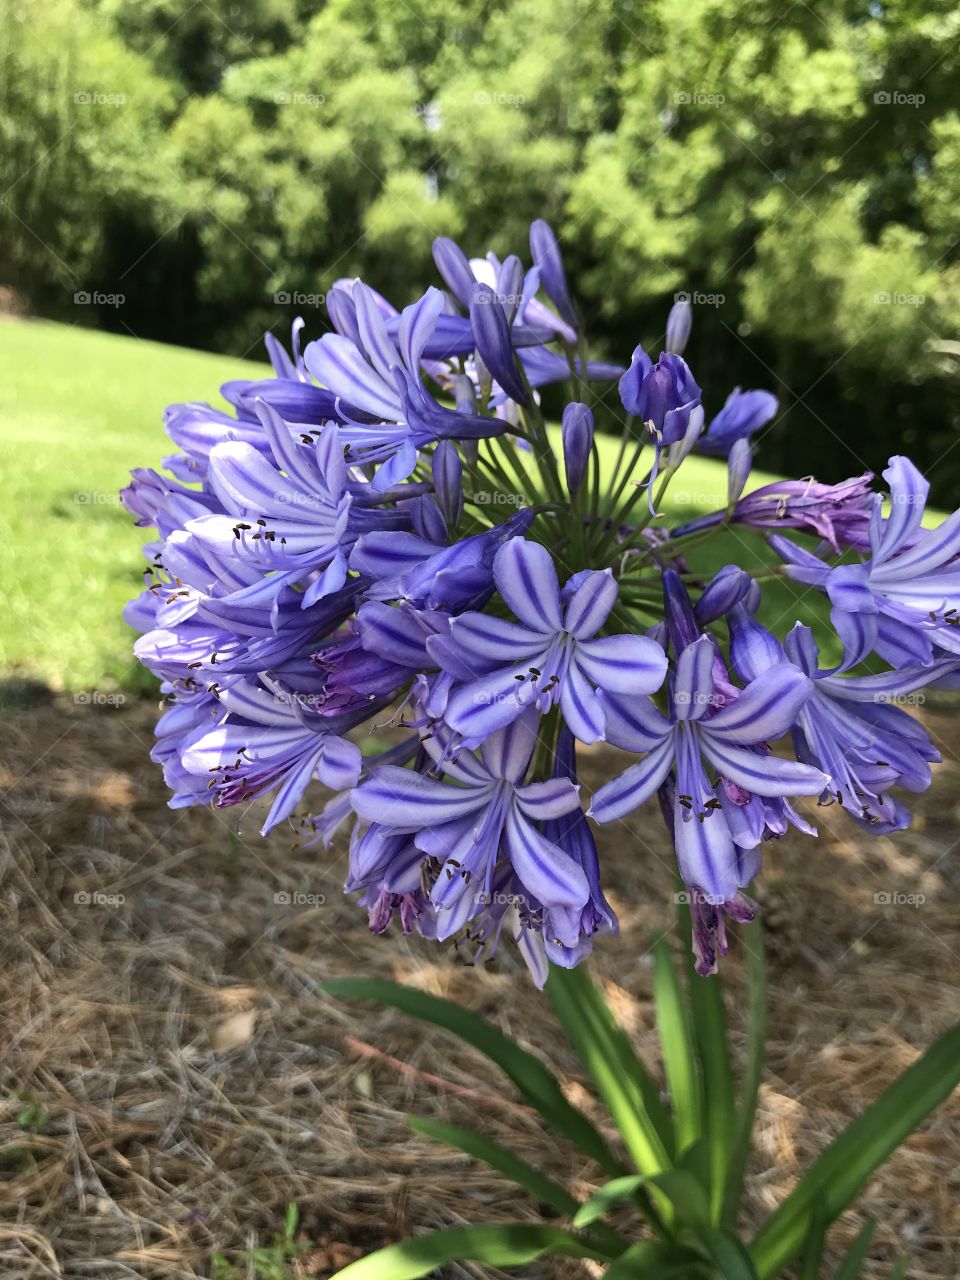 Purple flowers growing in a community garden in Brevard, NC